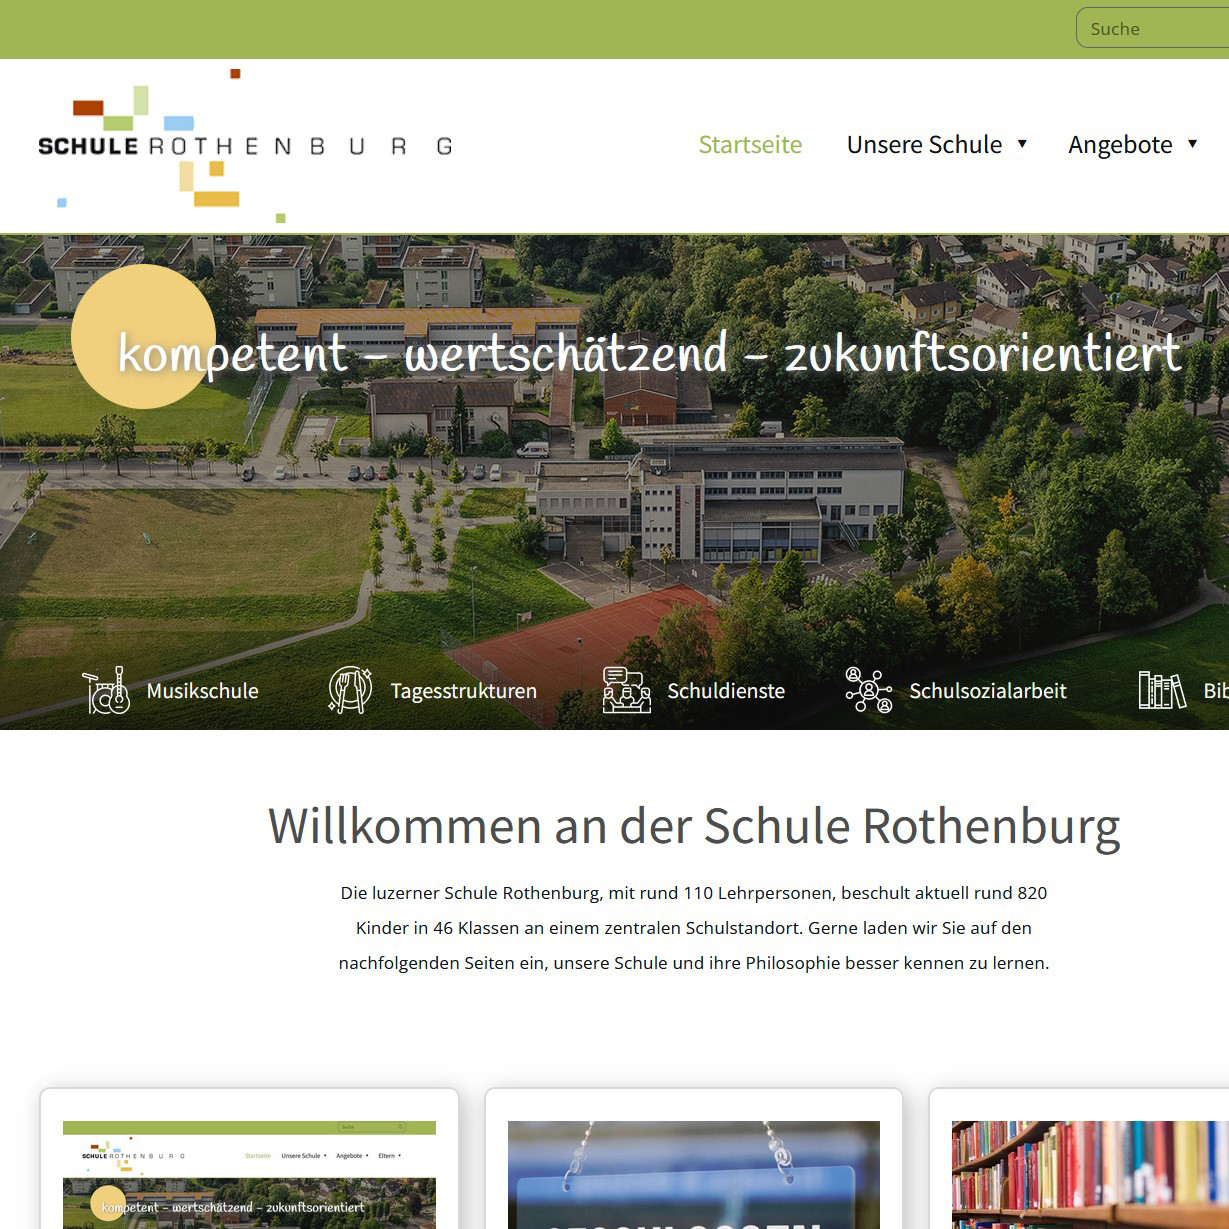 Schule Rothenburg